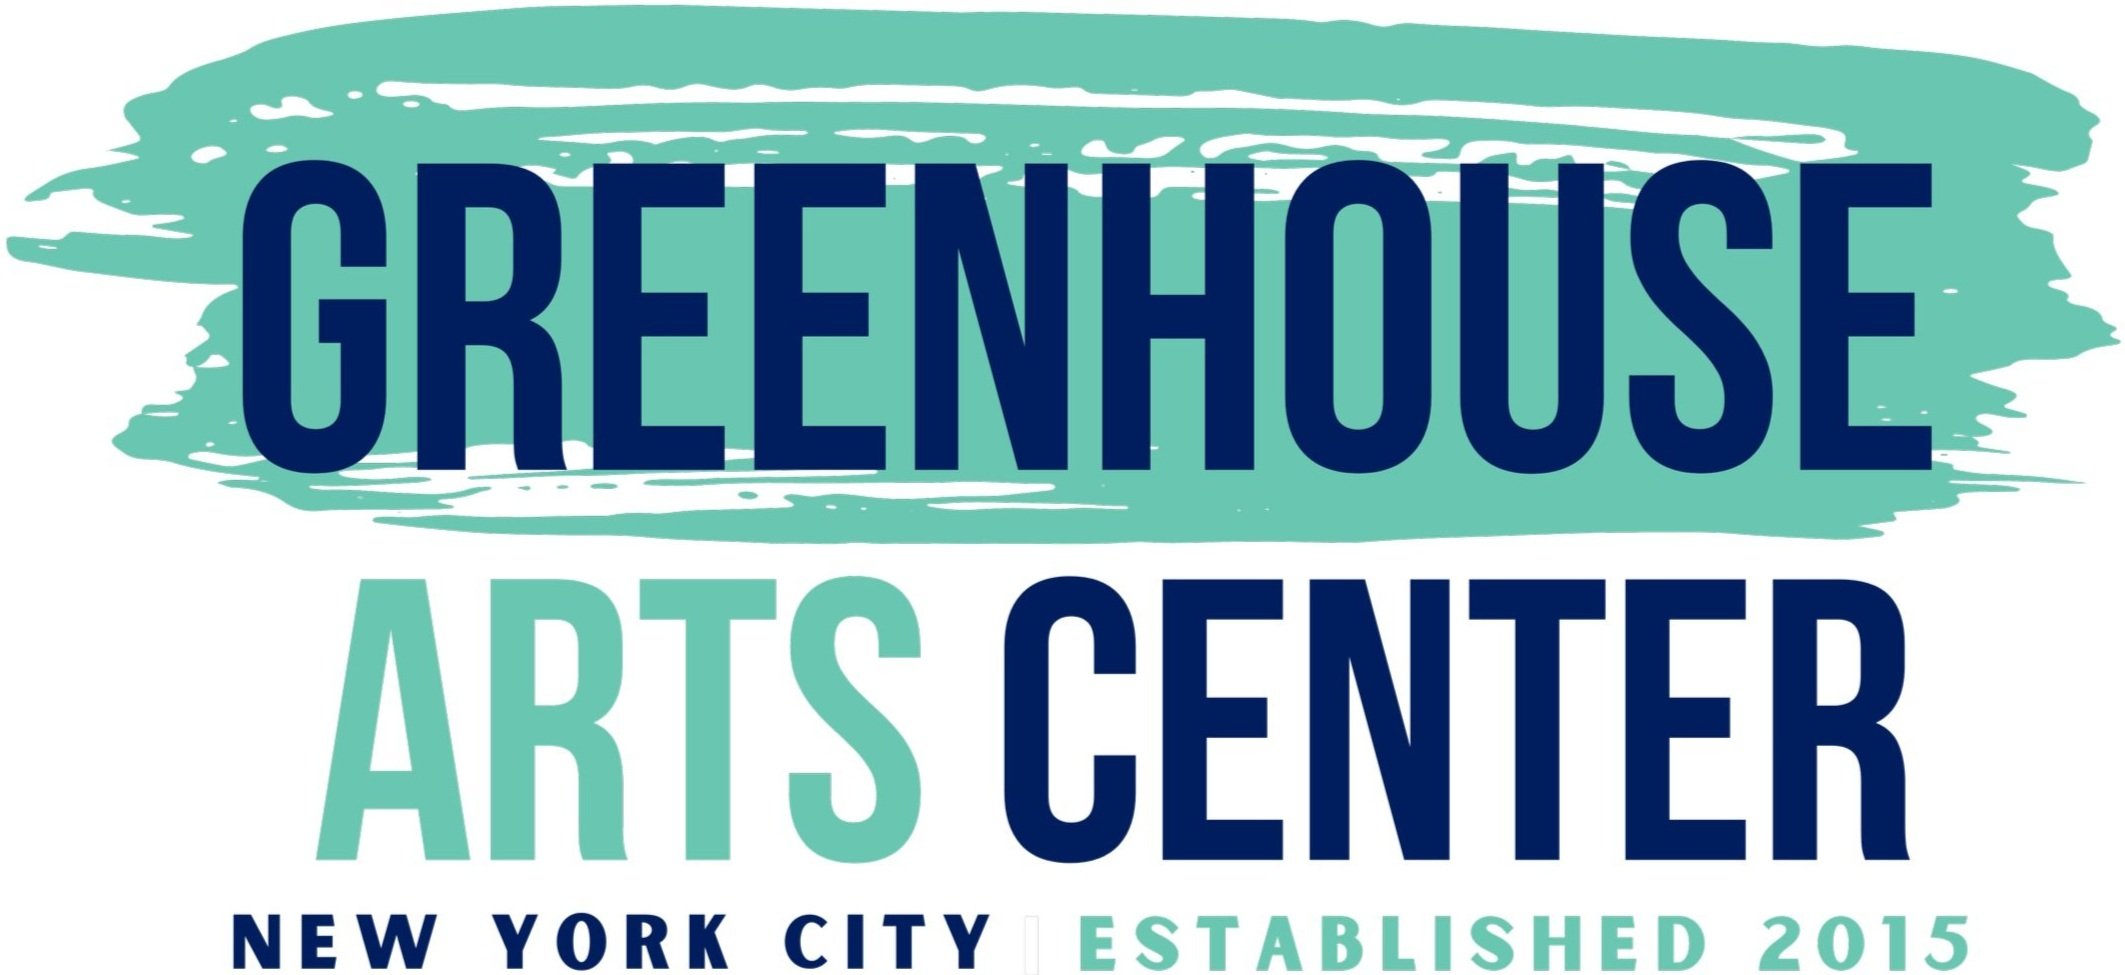 Greenhouse Arts Center